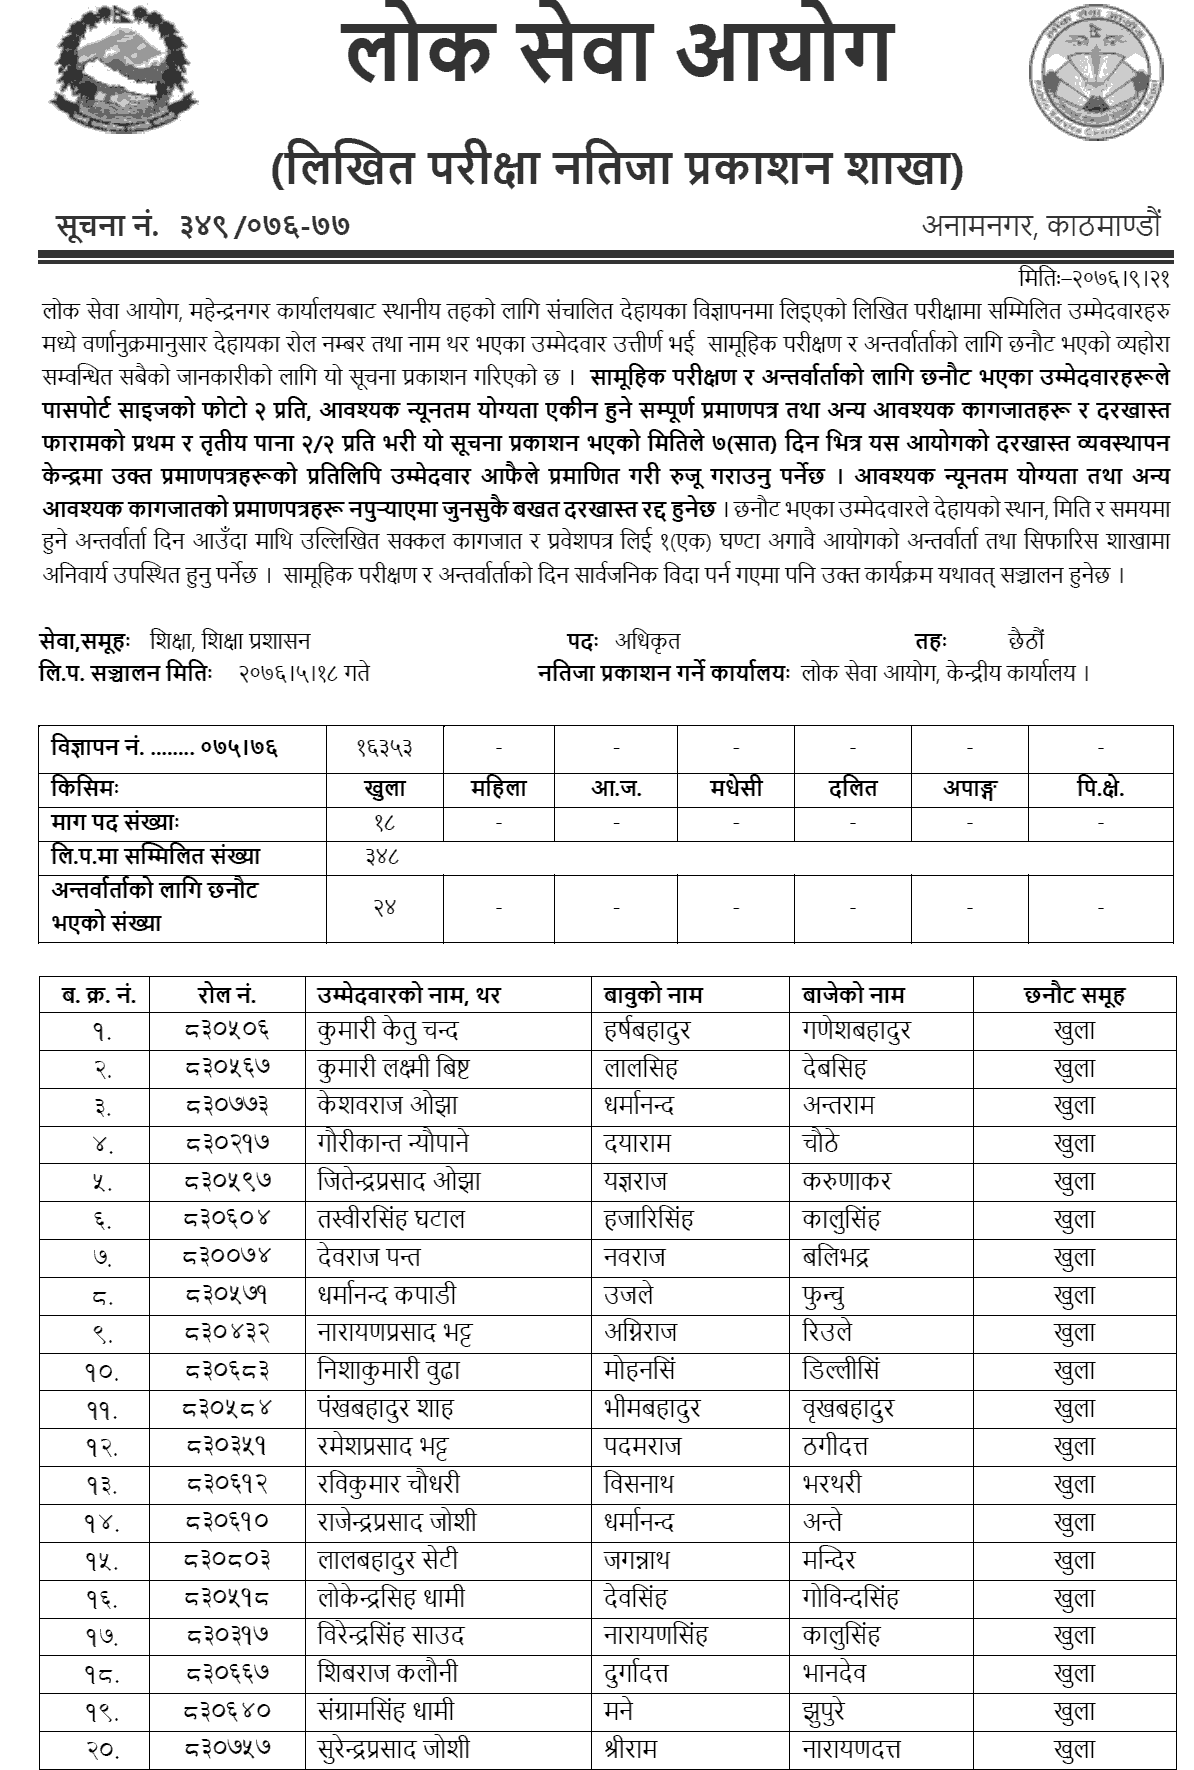 Lok Sewa Aayog Mahendranagar Local Level 6th Education Service Written Exam Result